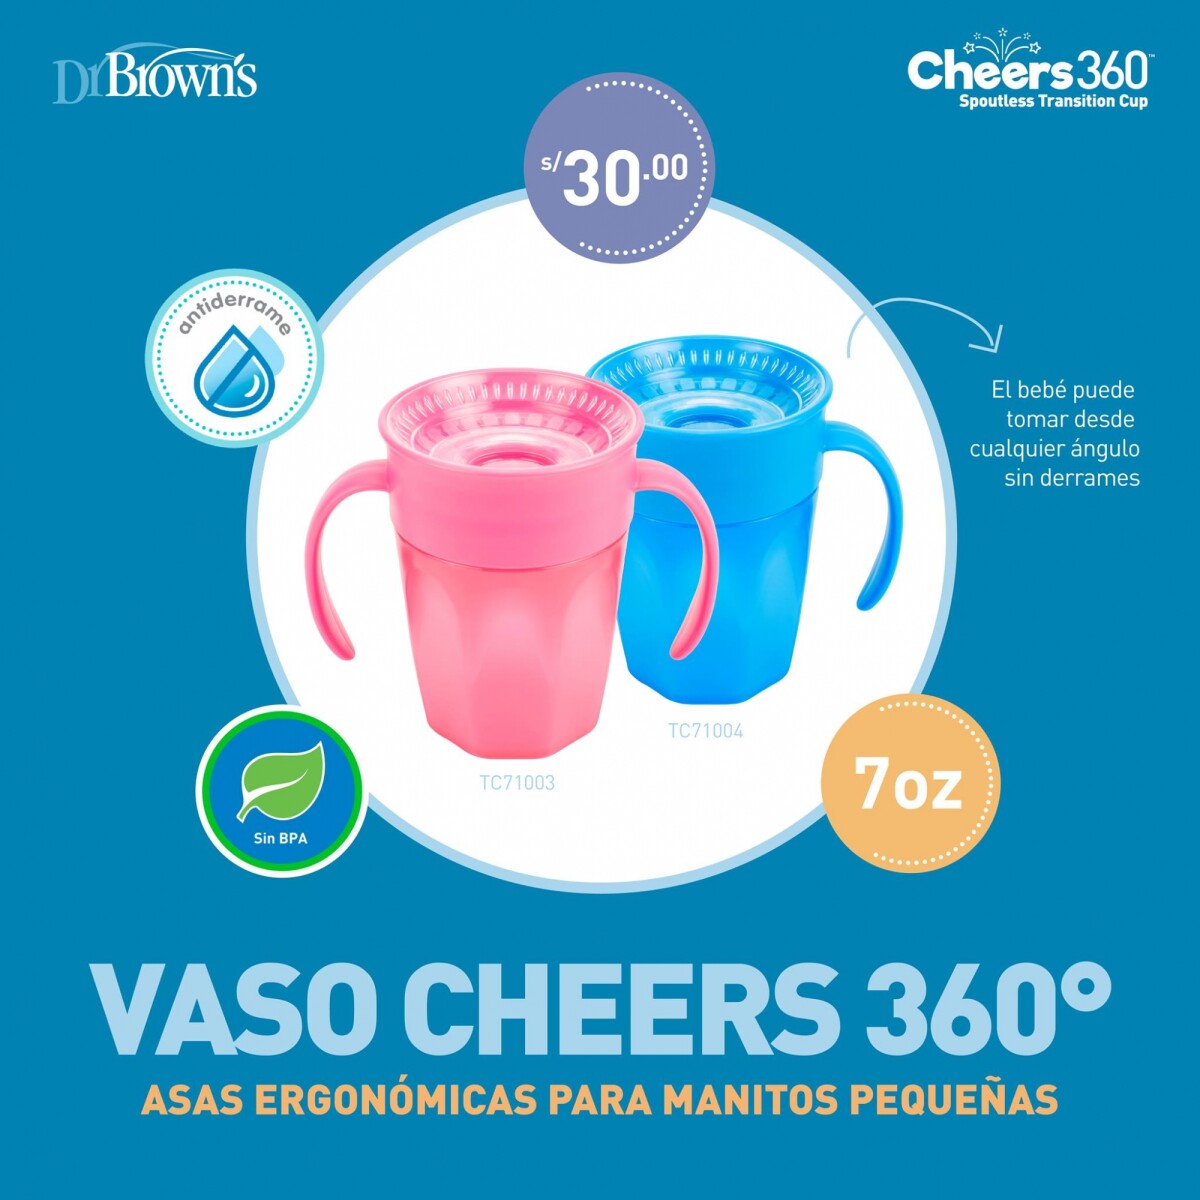 Vaso Cheers 360 - Dr Browns 